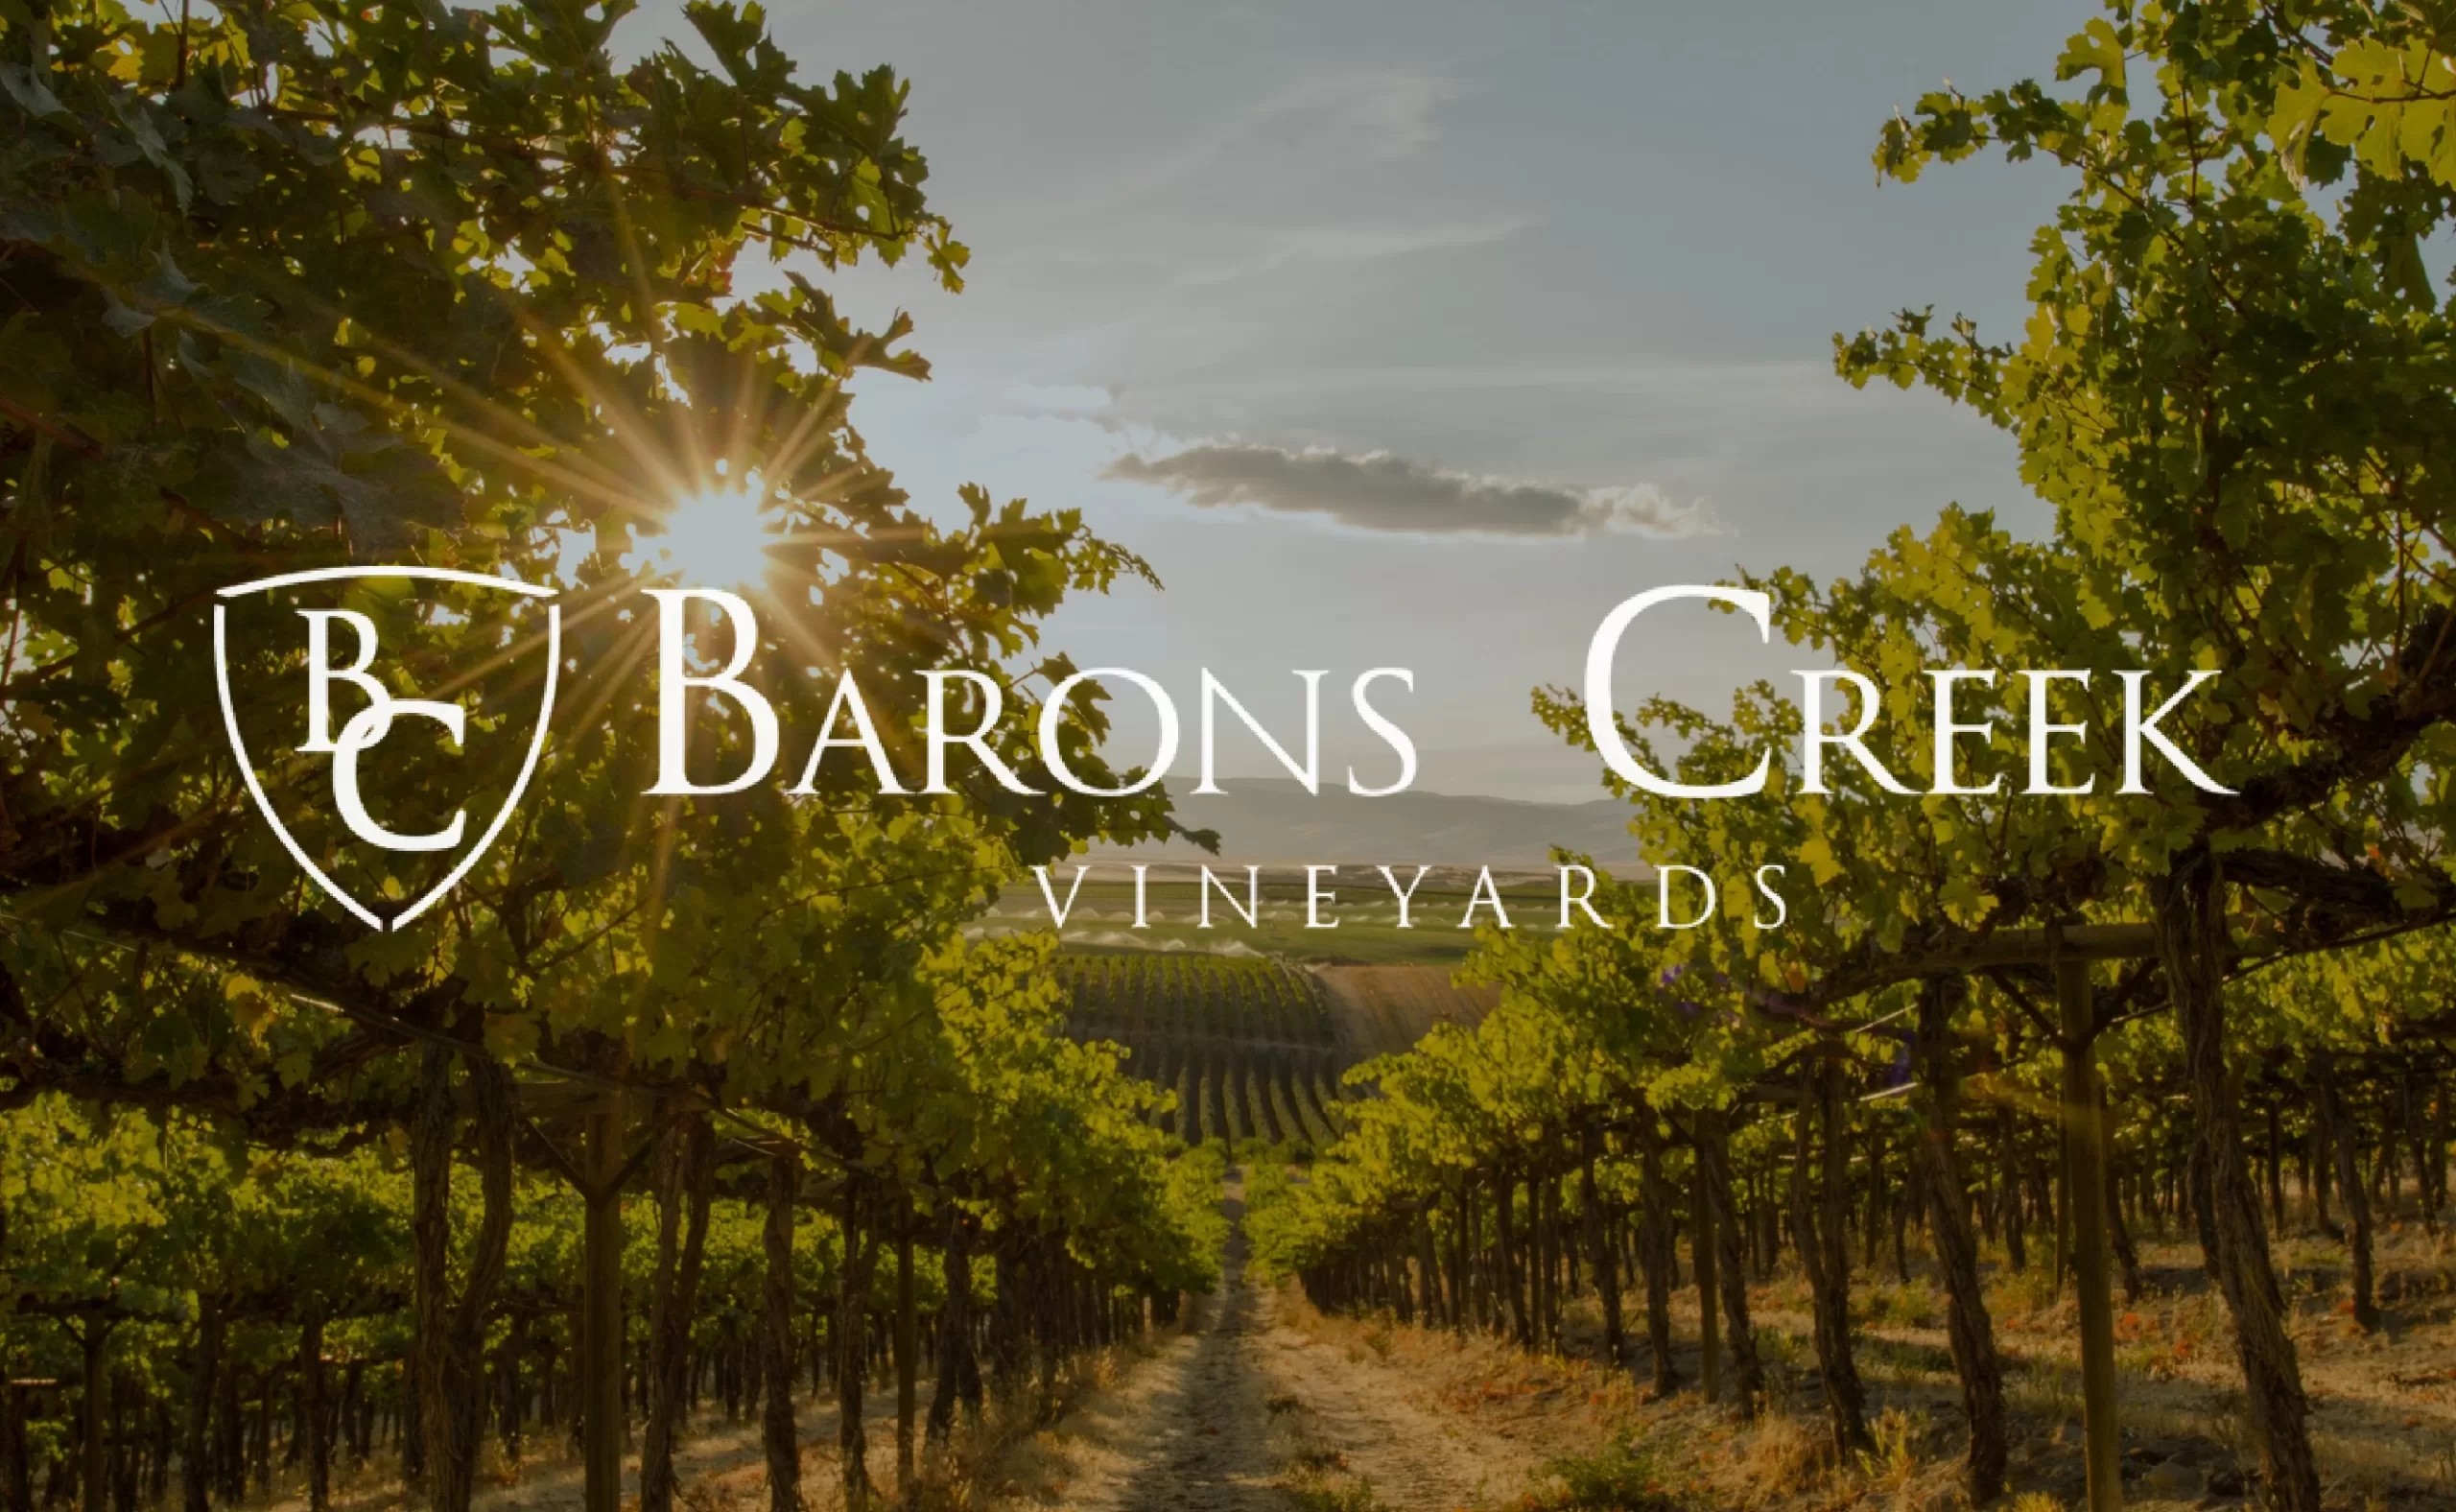 Barons Creek Vineyard in Fredericksburg, TX Logo